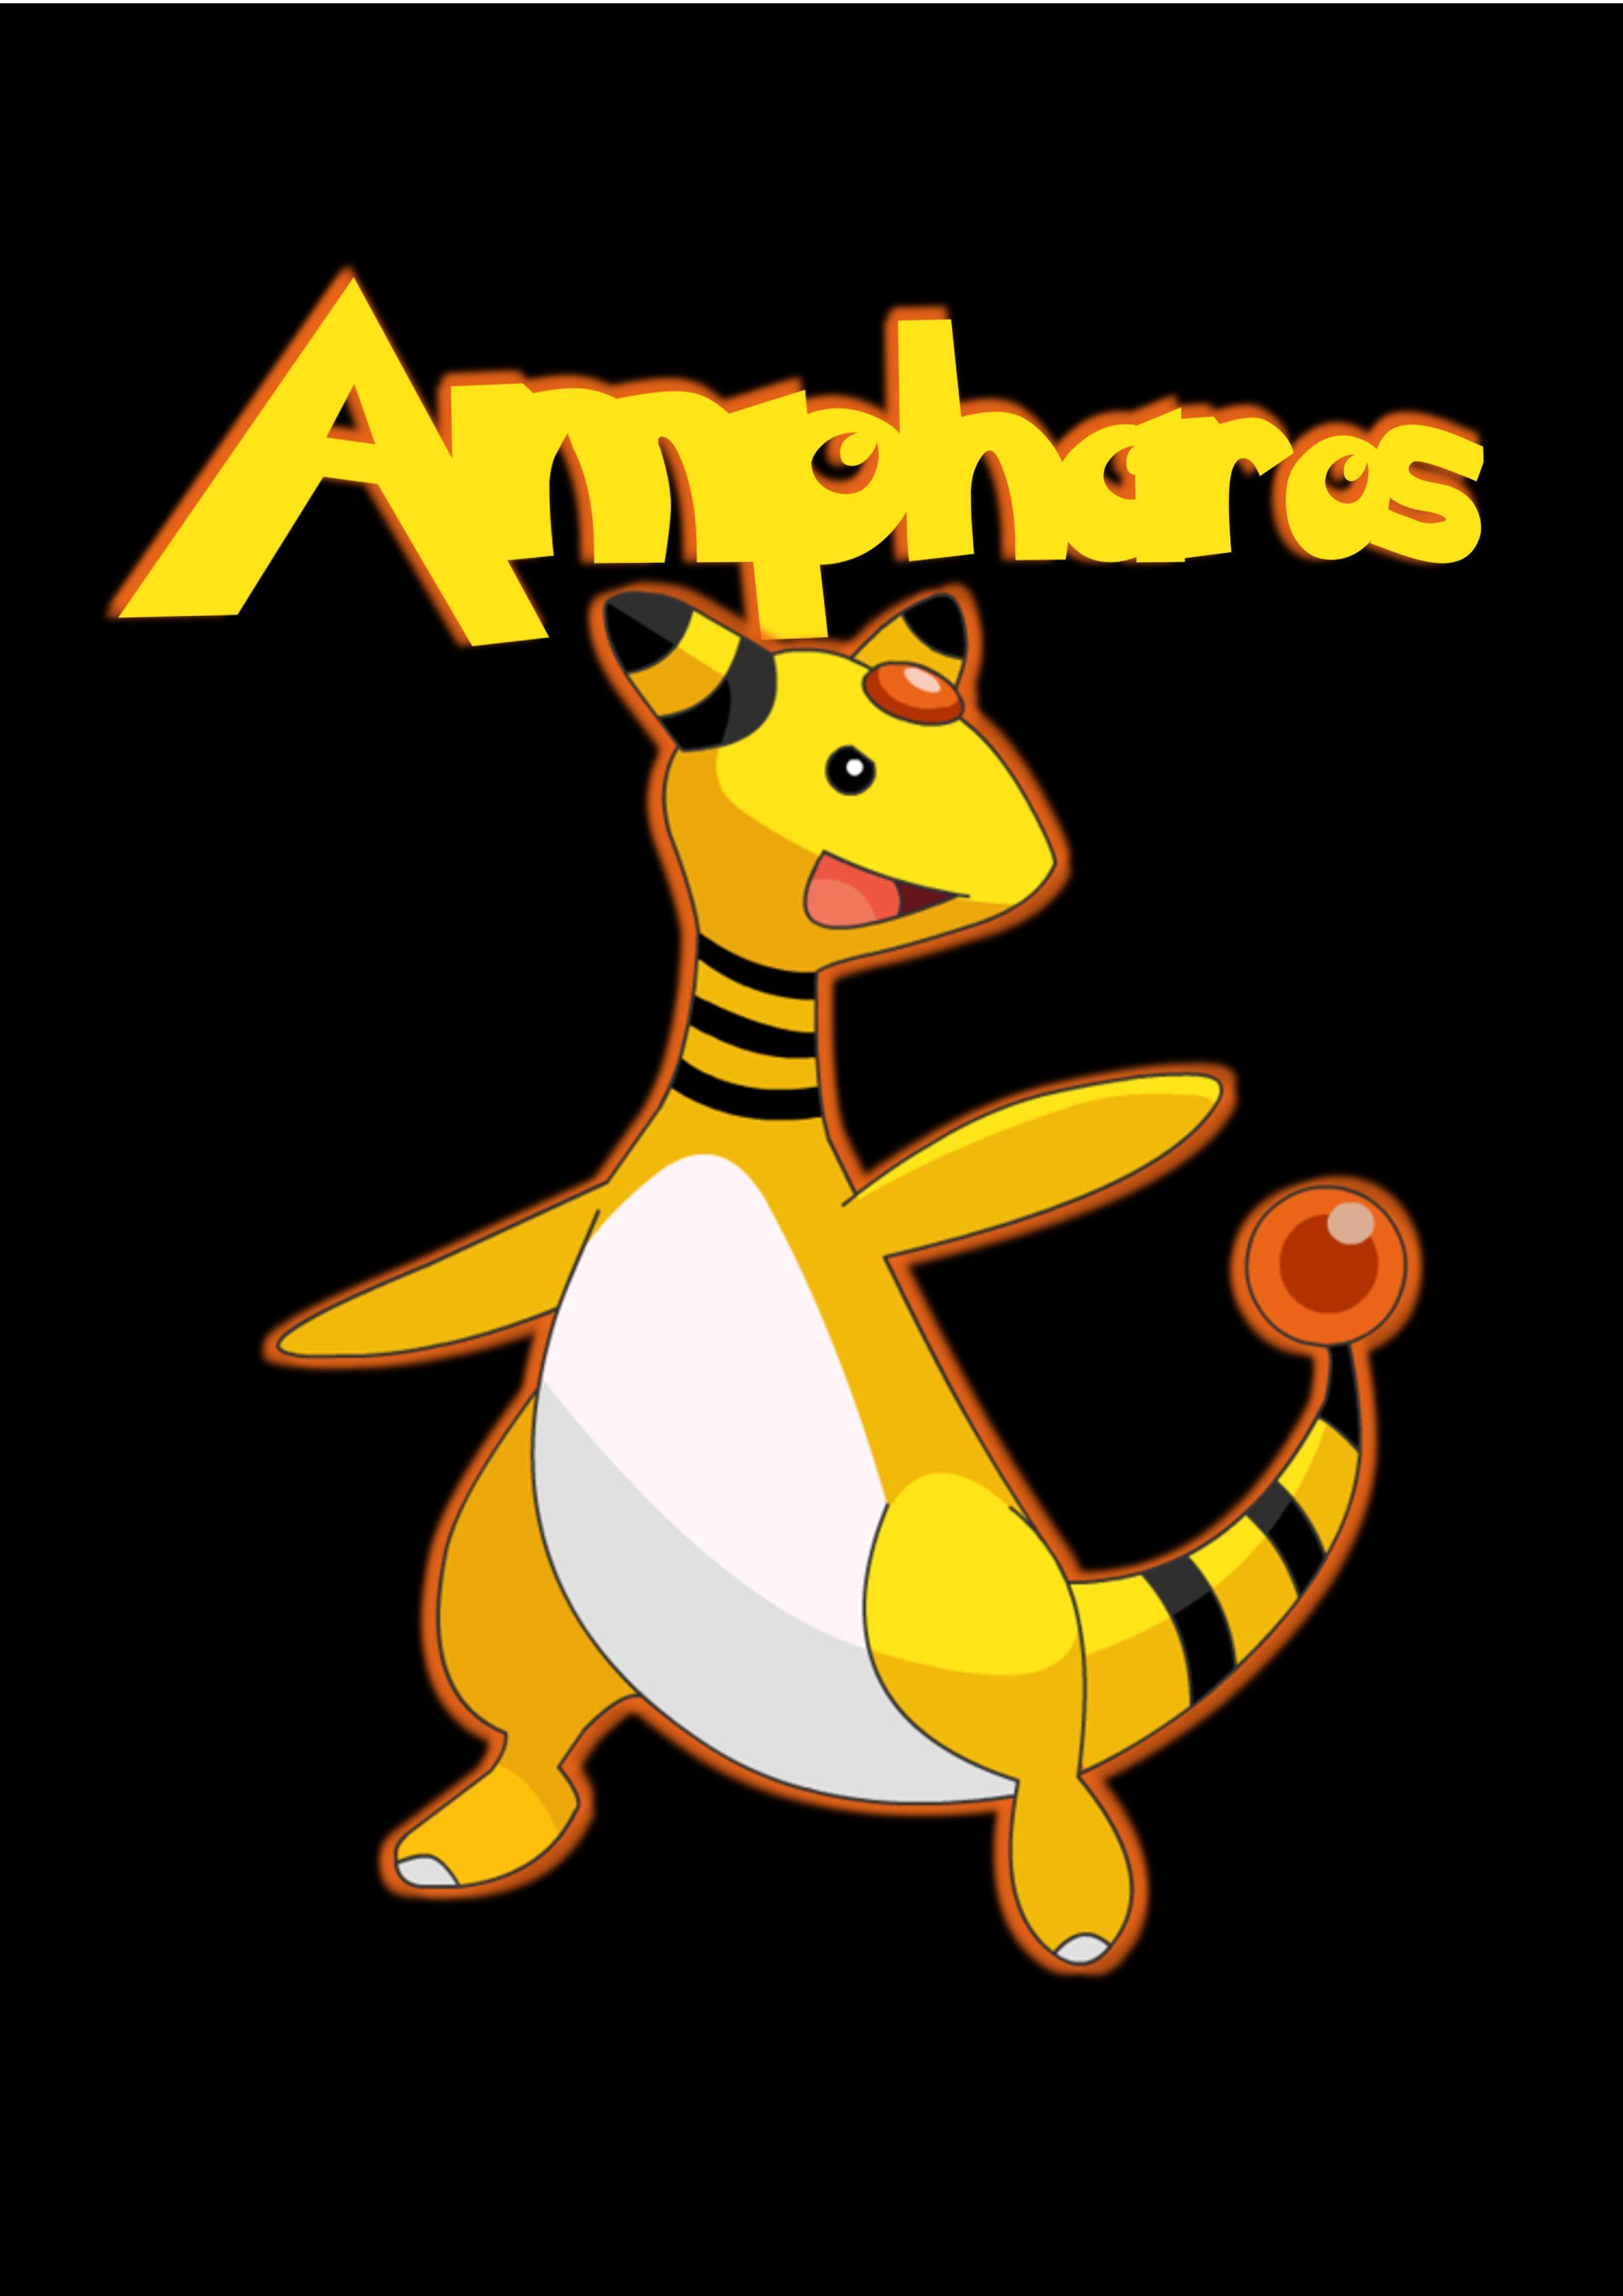 Ampharos (T Shirt Idea)